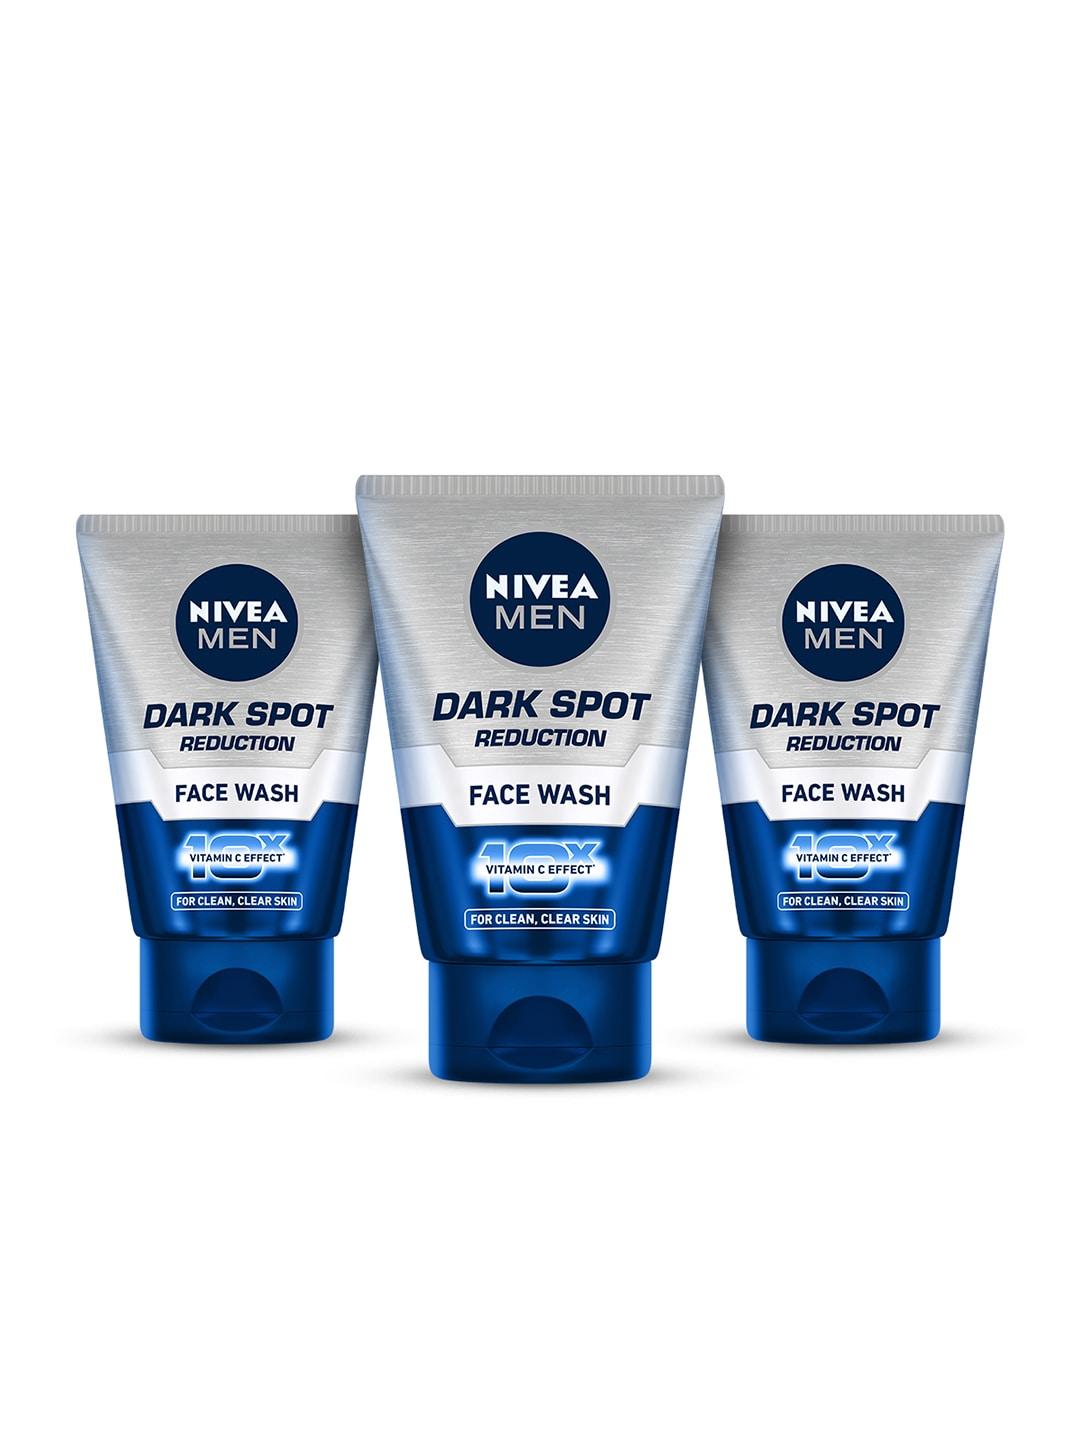 Nivea Men Set of 3 Dark Spot Reduction Face Wash with 10X Vitamin C Effect - 100ml each